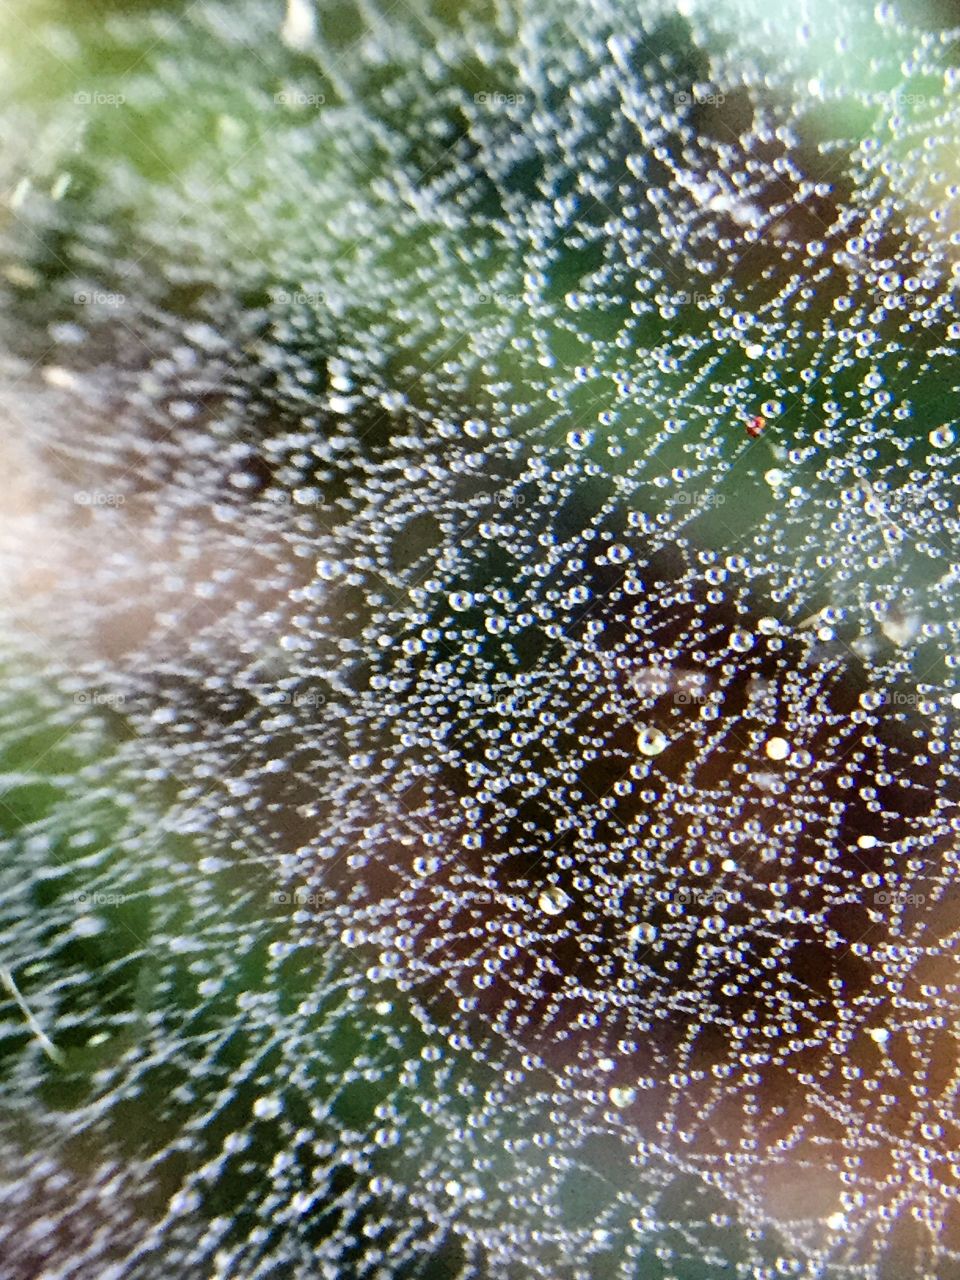 Macro spider web with dew drops 